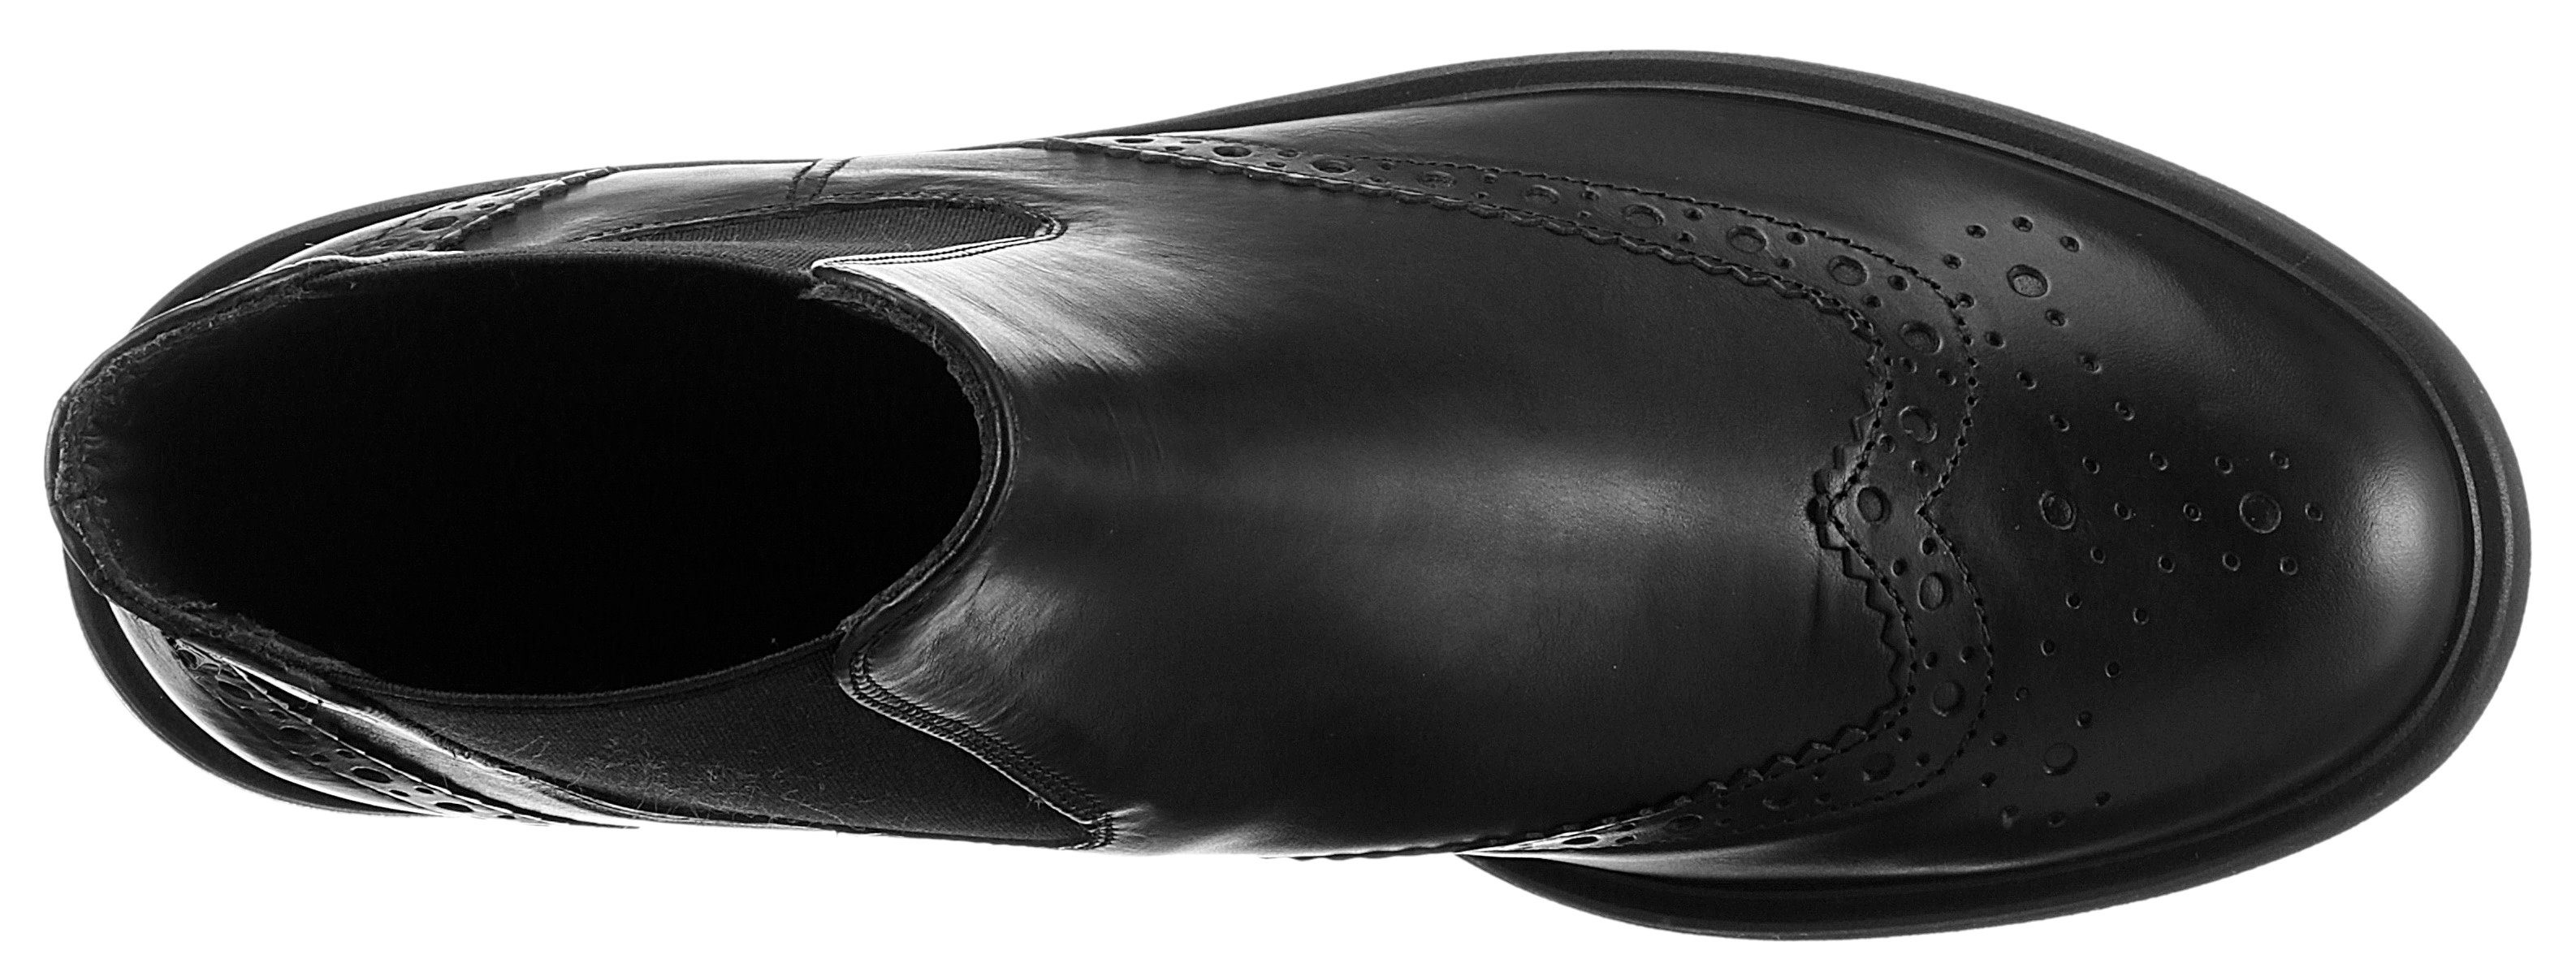 Paul Green Chelseaboots schwarz Synthetiklaufsohle mit leichter